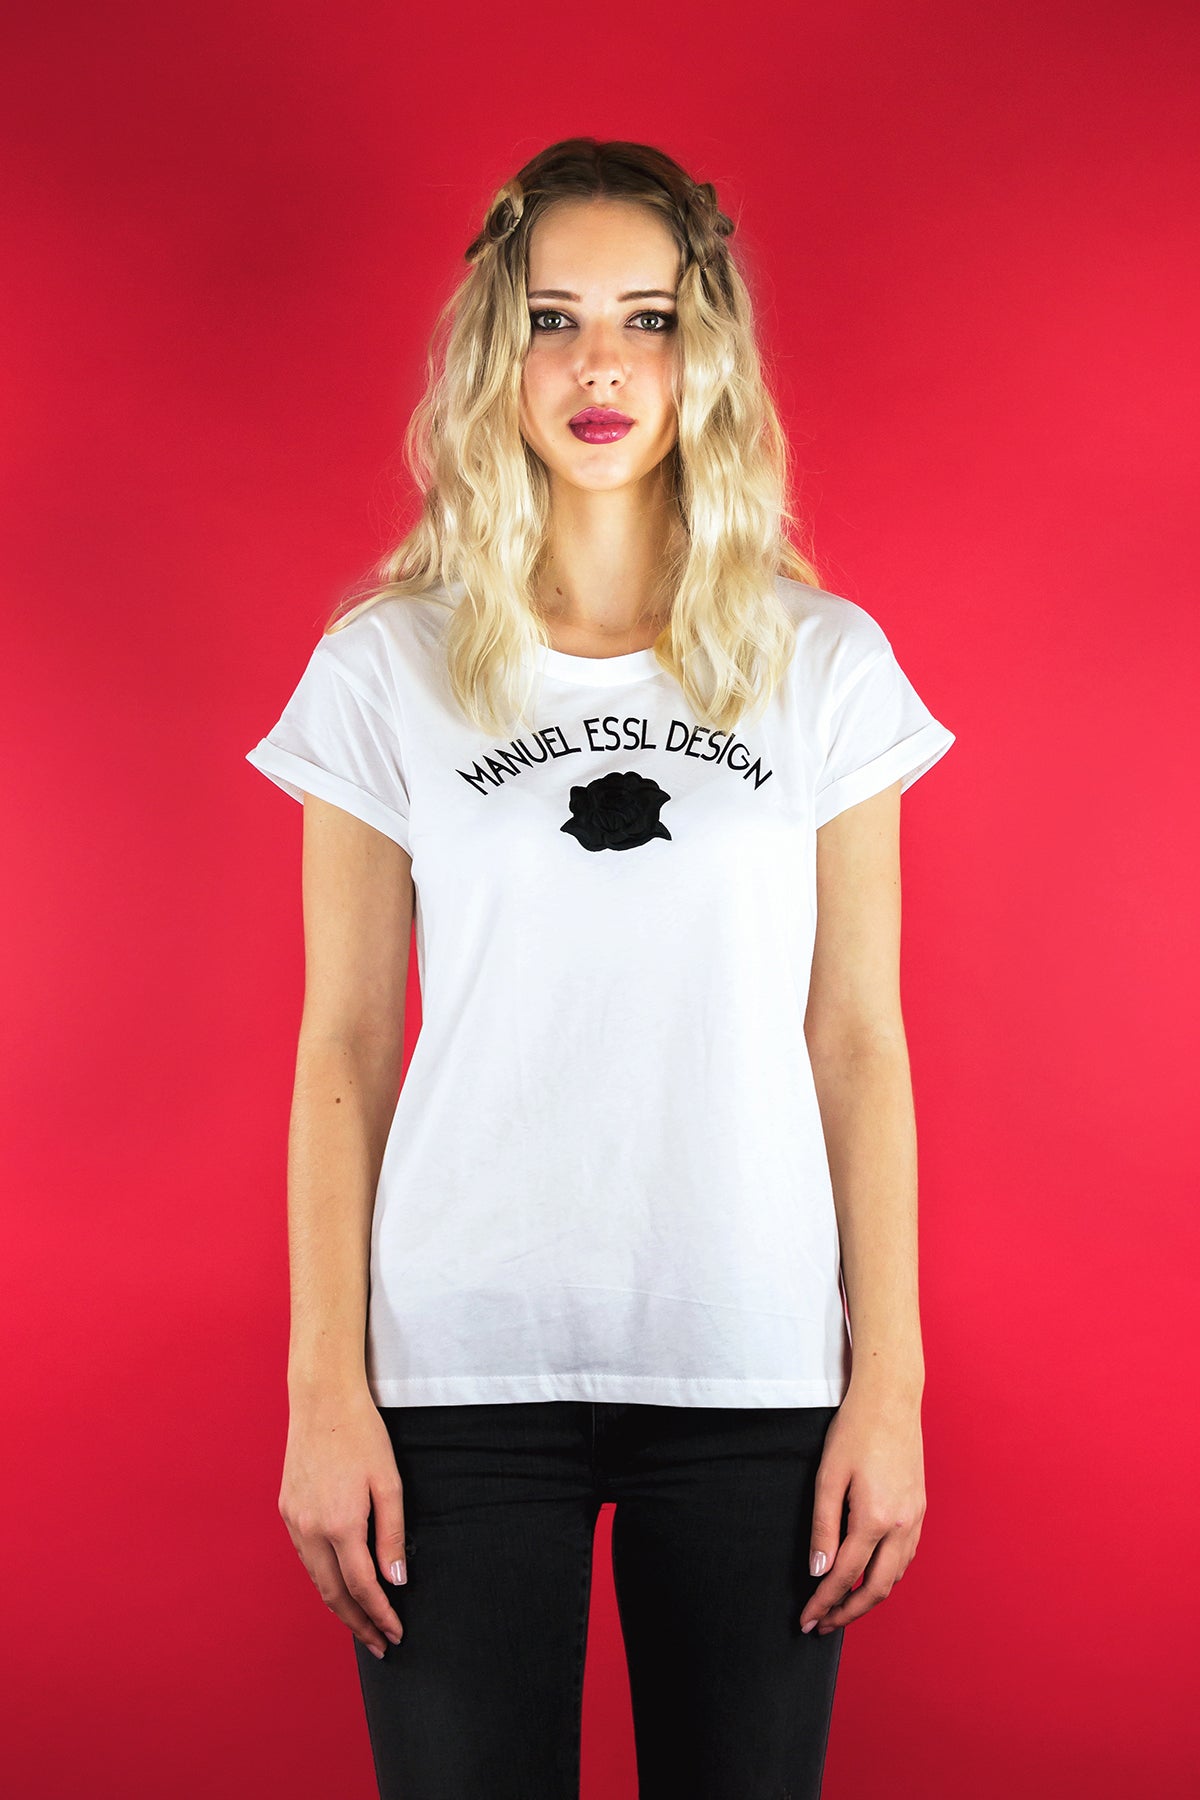 T-Shirt "ROSE" - White - Manuel Essl Design